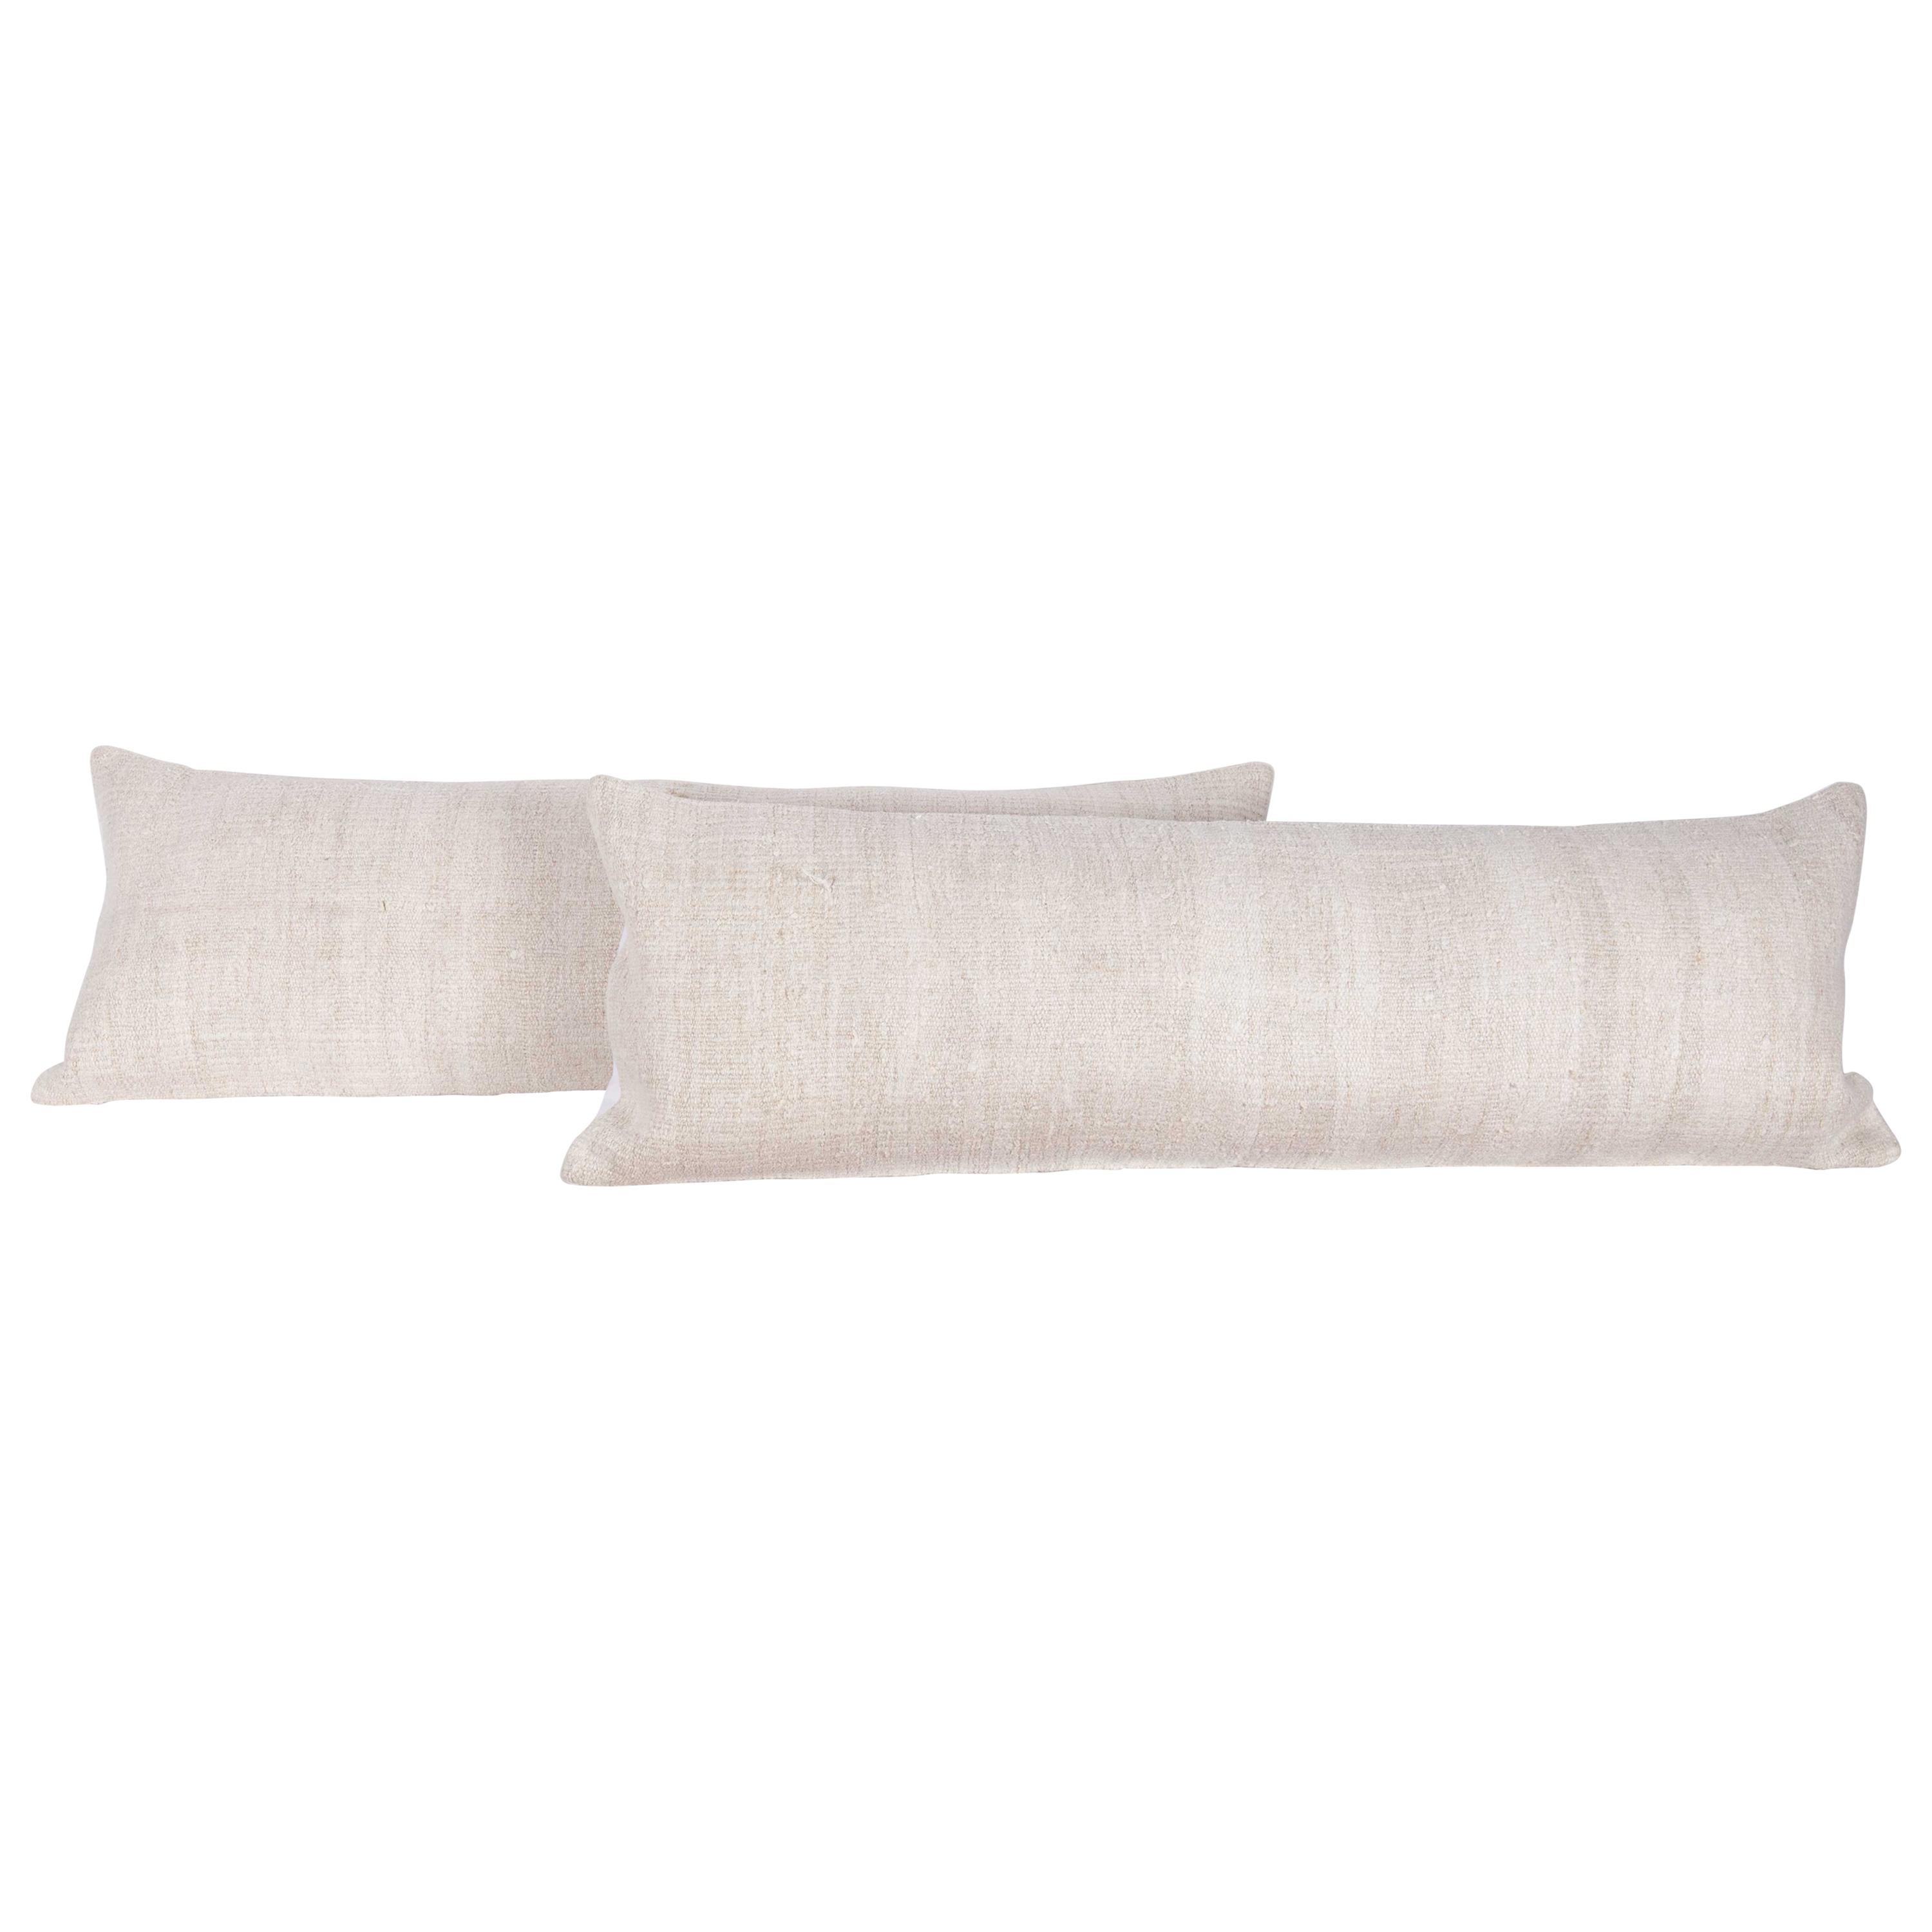 Hemp Lumbar Pillow Cases Made from a Mid-20th Century Turkish Hemp Kilim